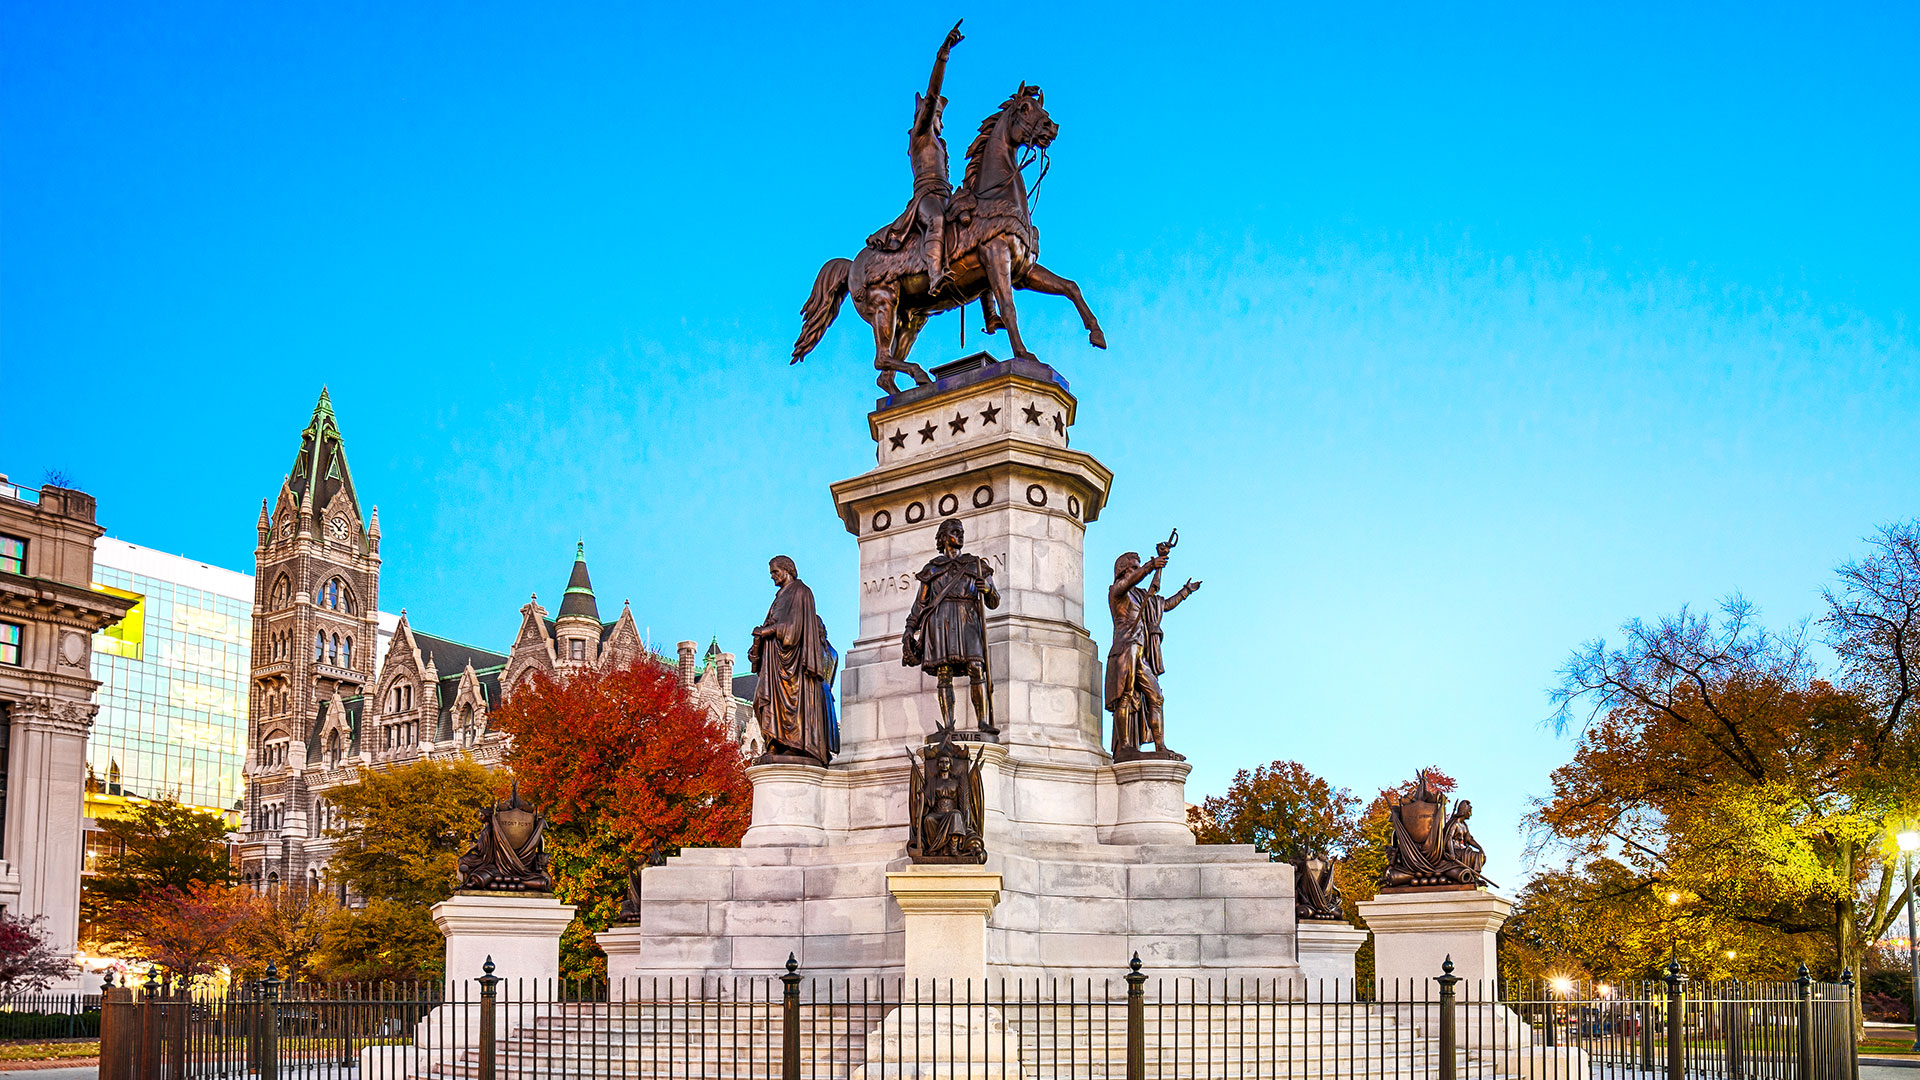 The Virginia Washington Monument in Richmond, Virginia